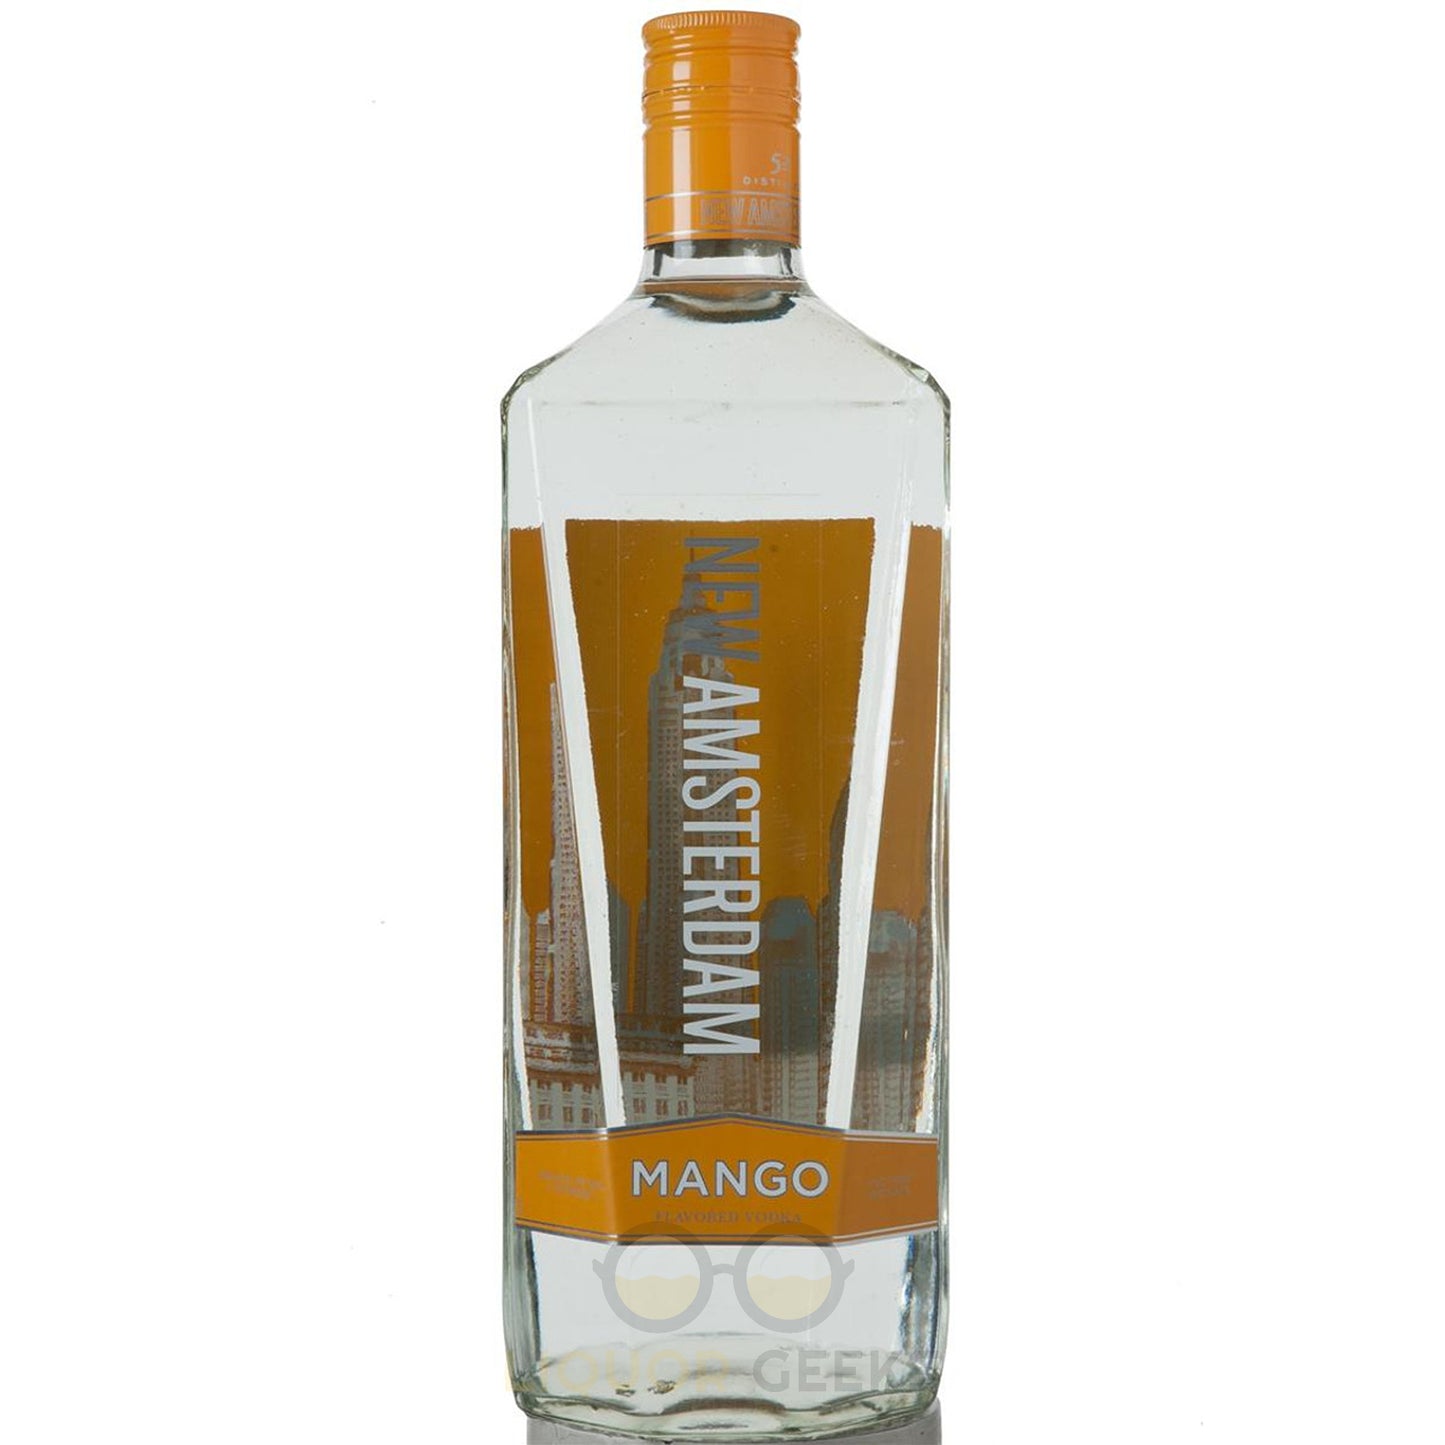 New Amsterdam Mango Vodka - Liquor Geeks